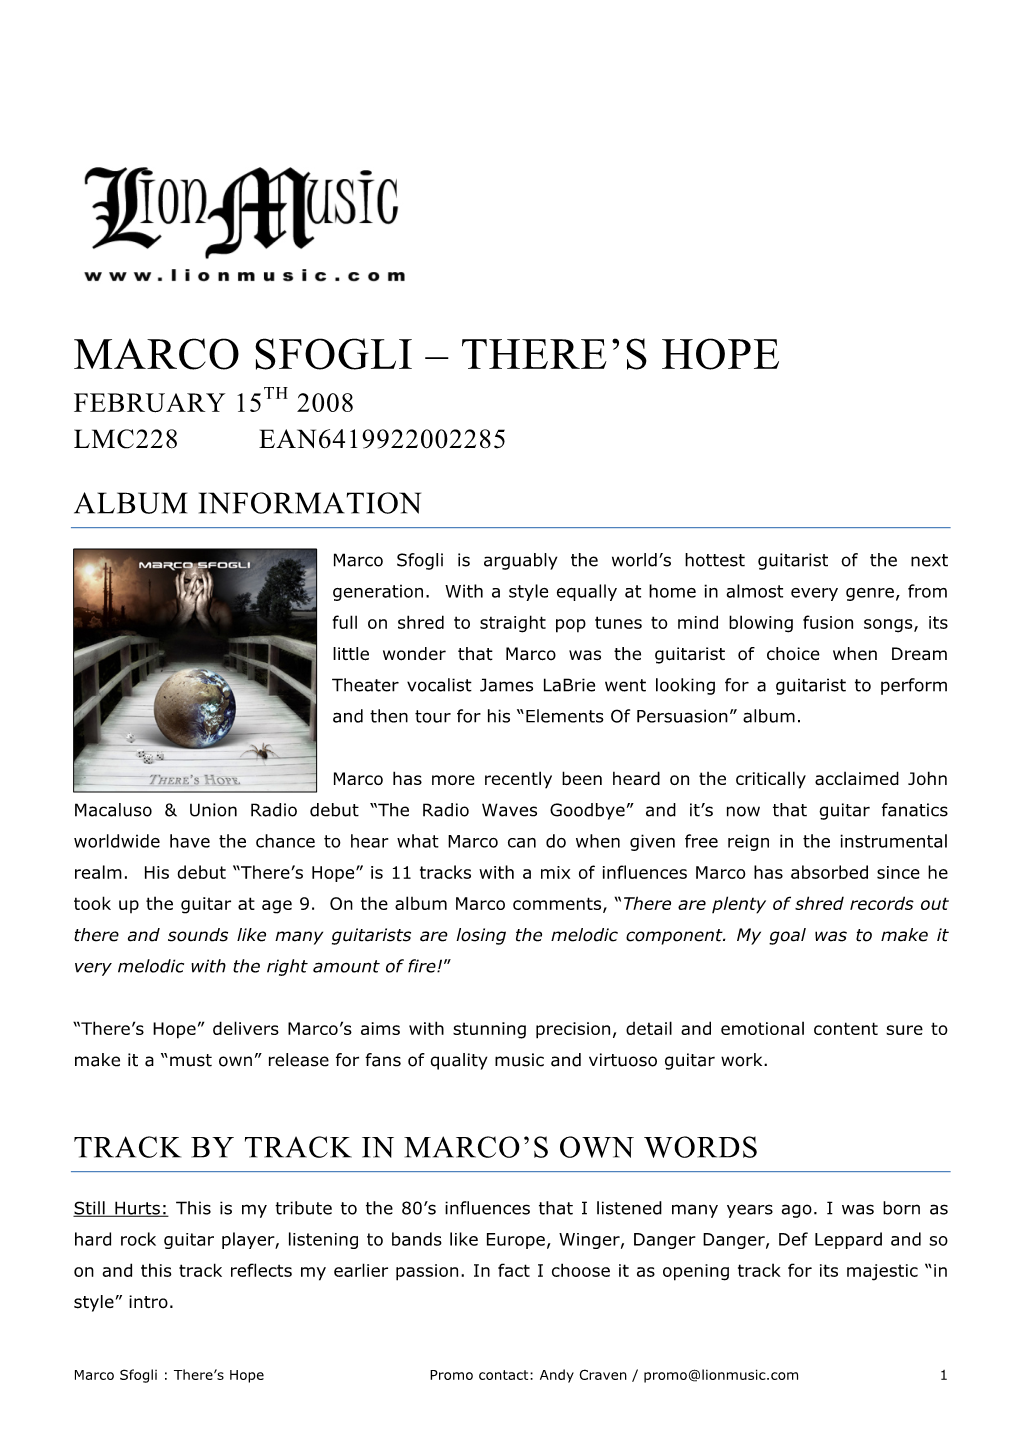 Marco Sfogli – There's Hope